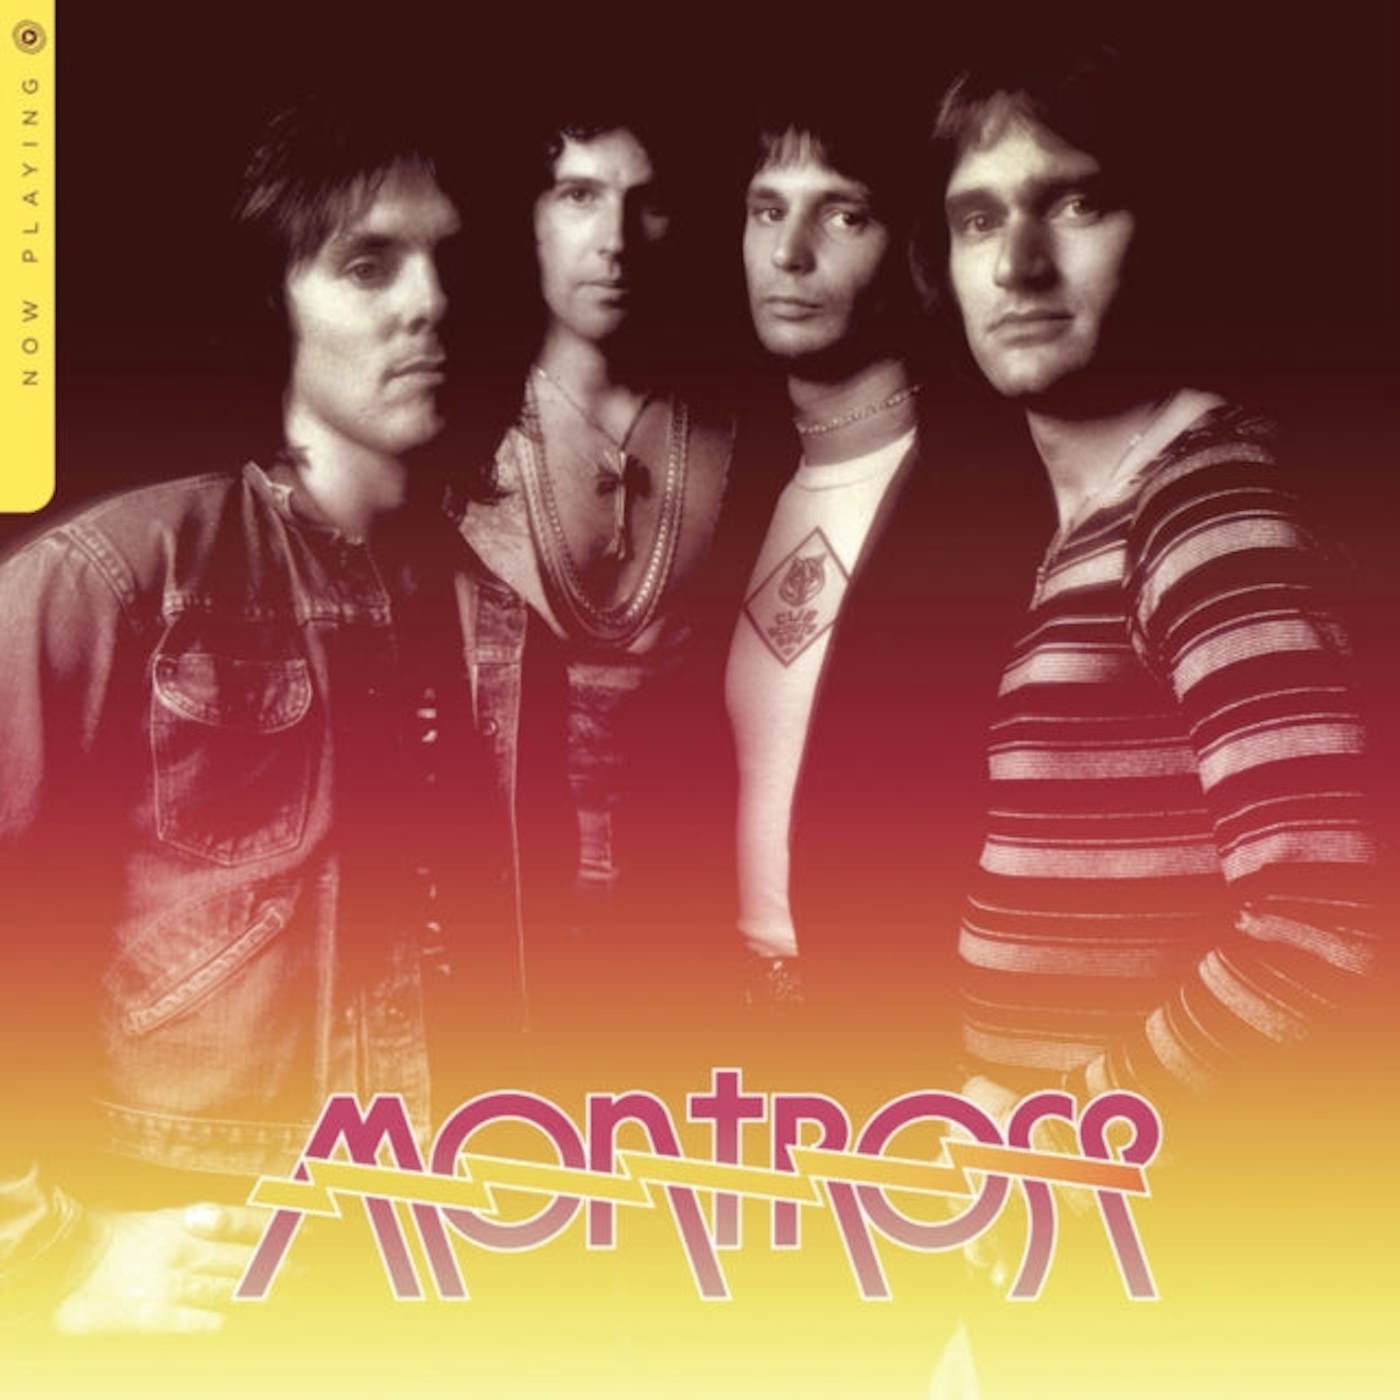 Montrose LP - Now Playing (Vinyl)